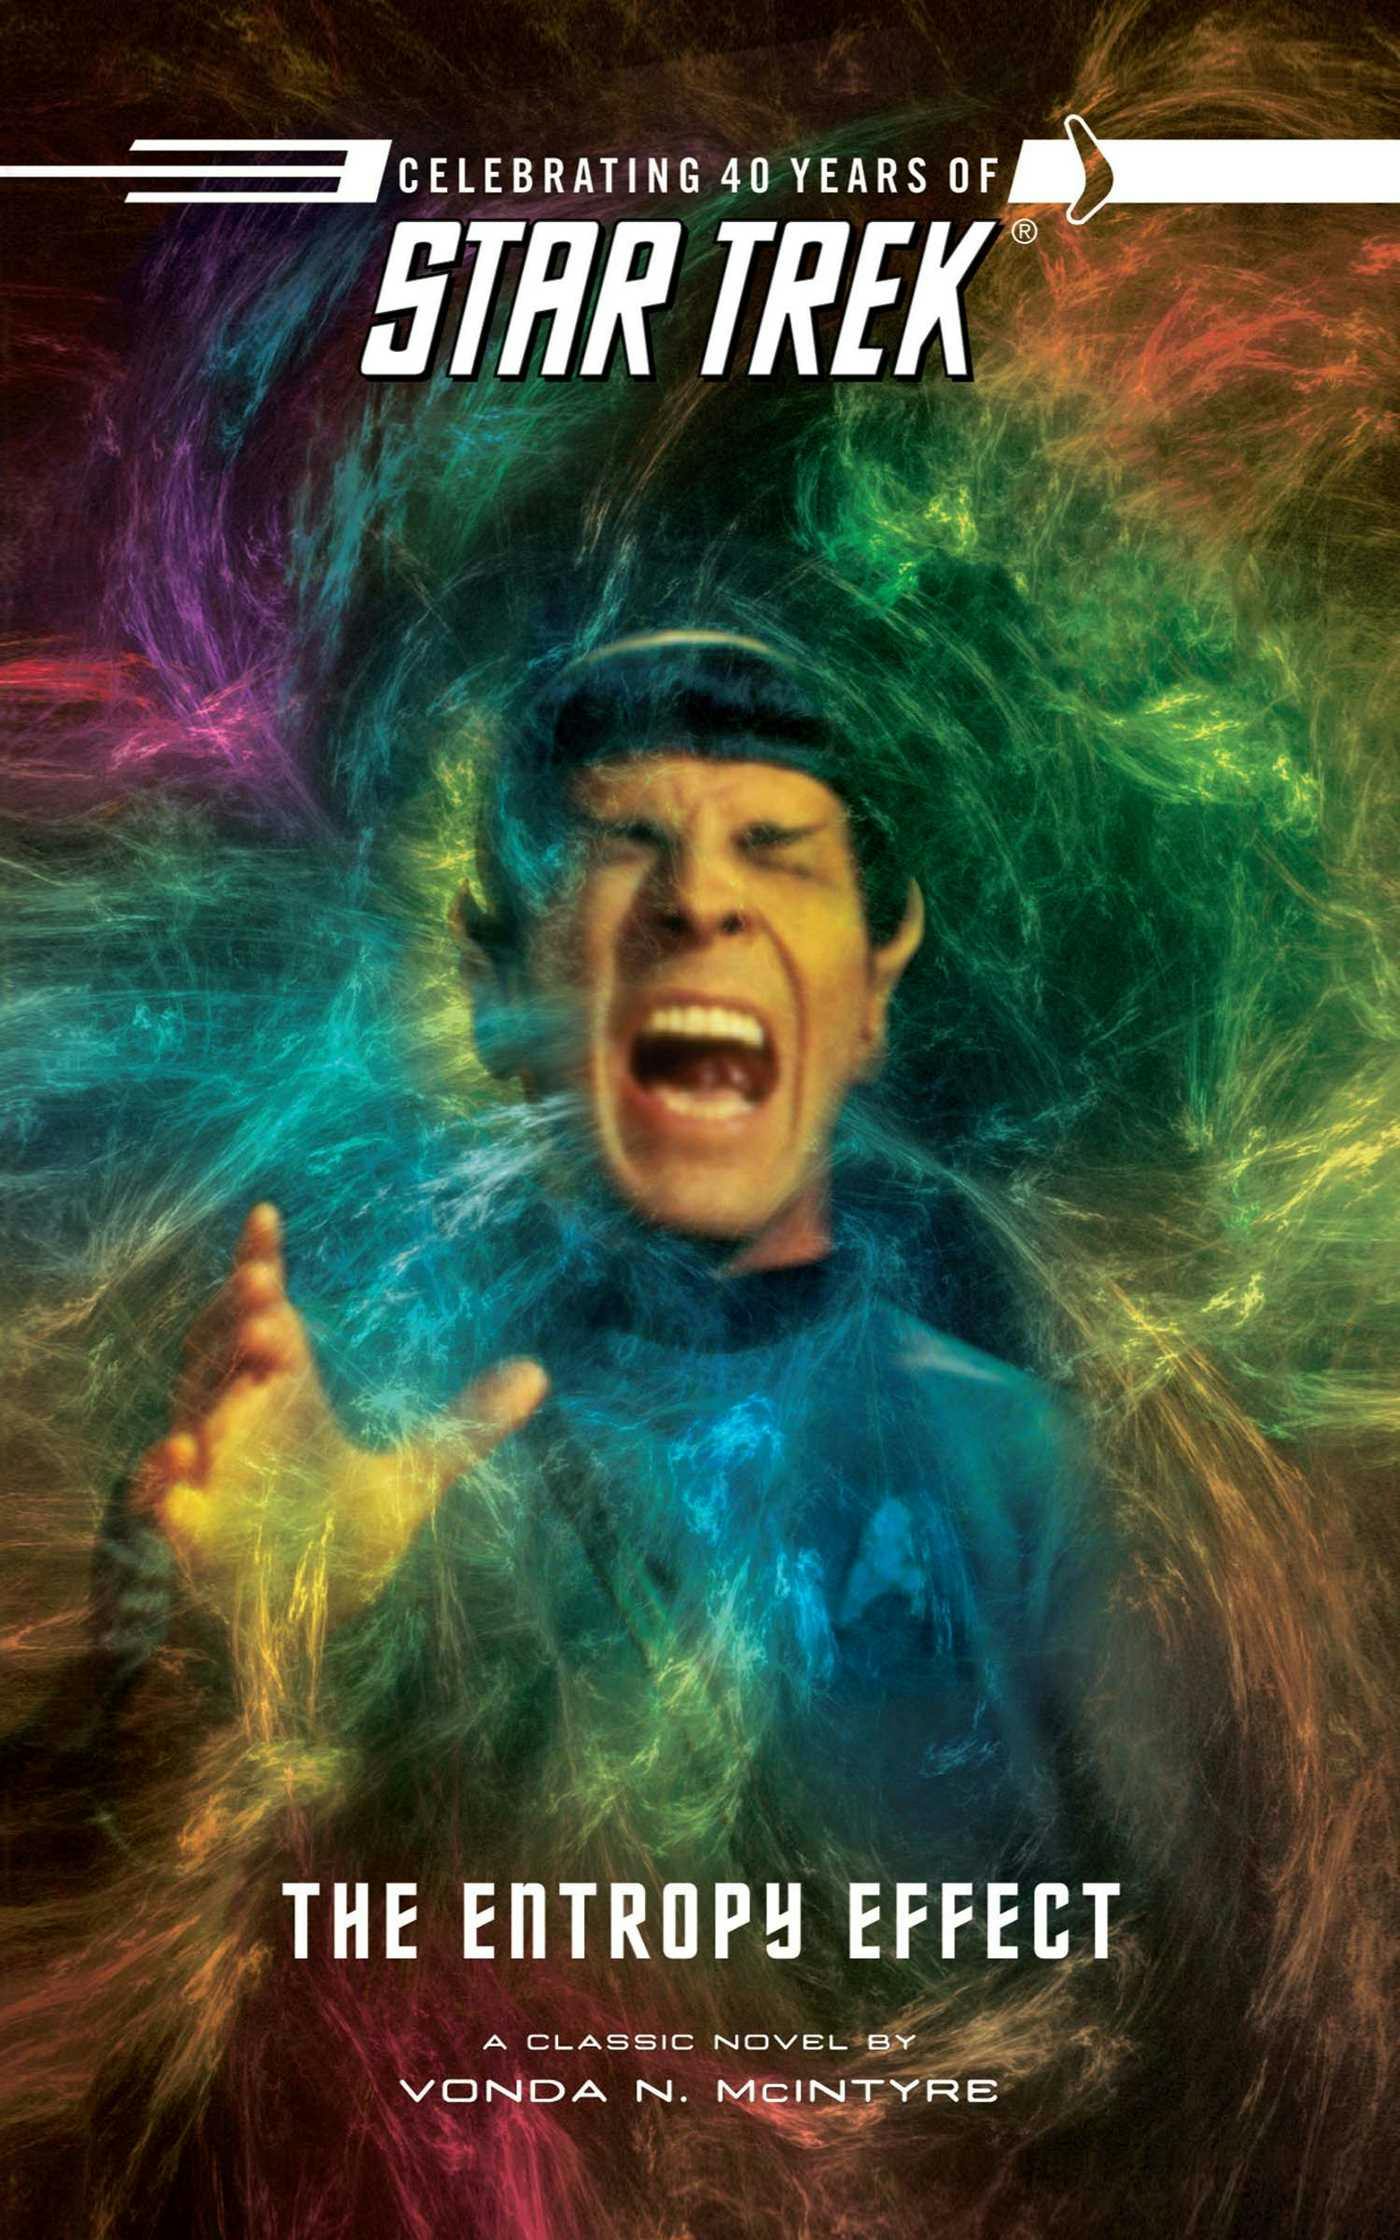 Star Trek: The Original Series: The Entropy Effect